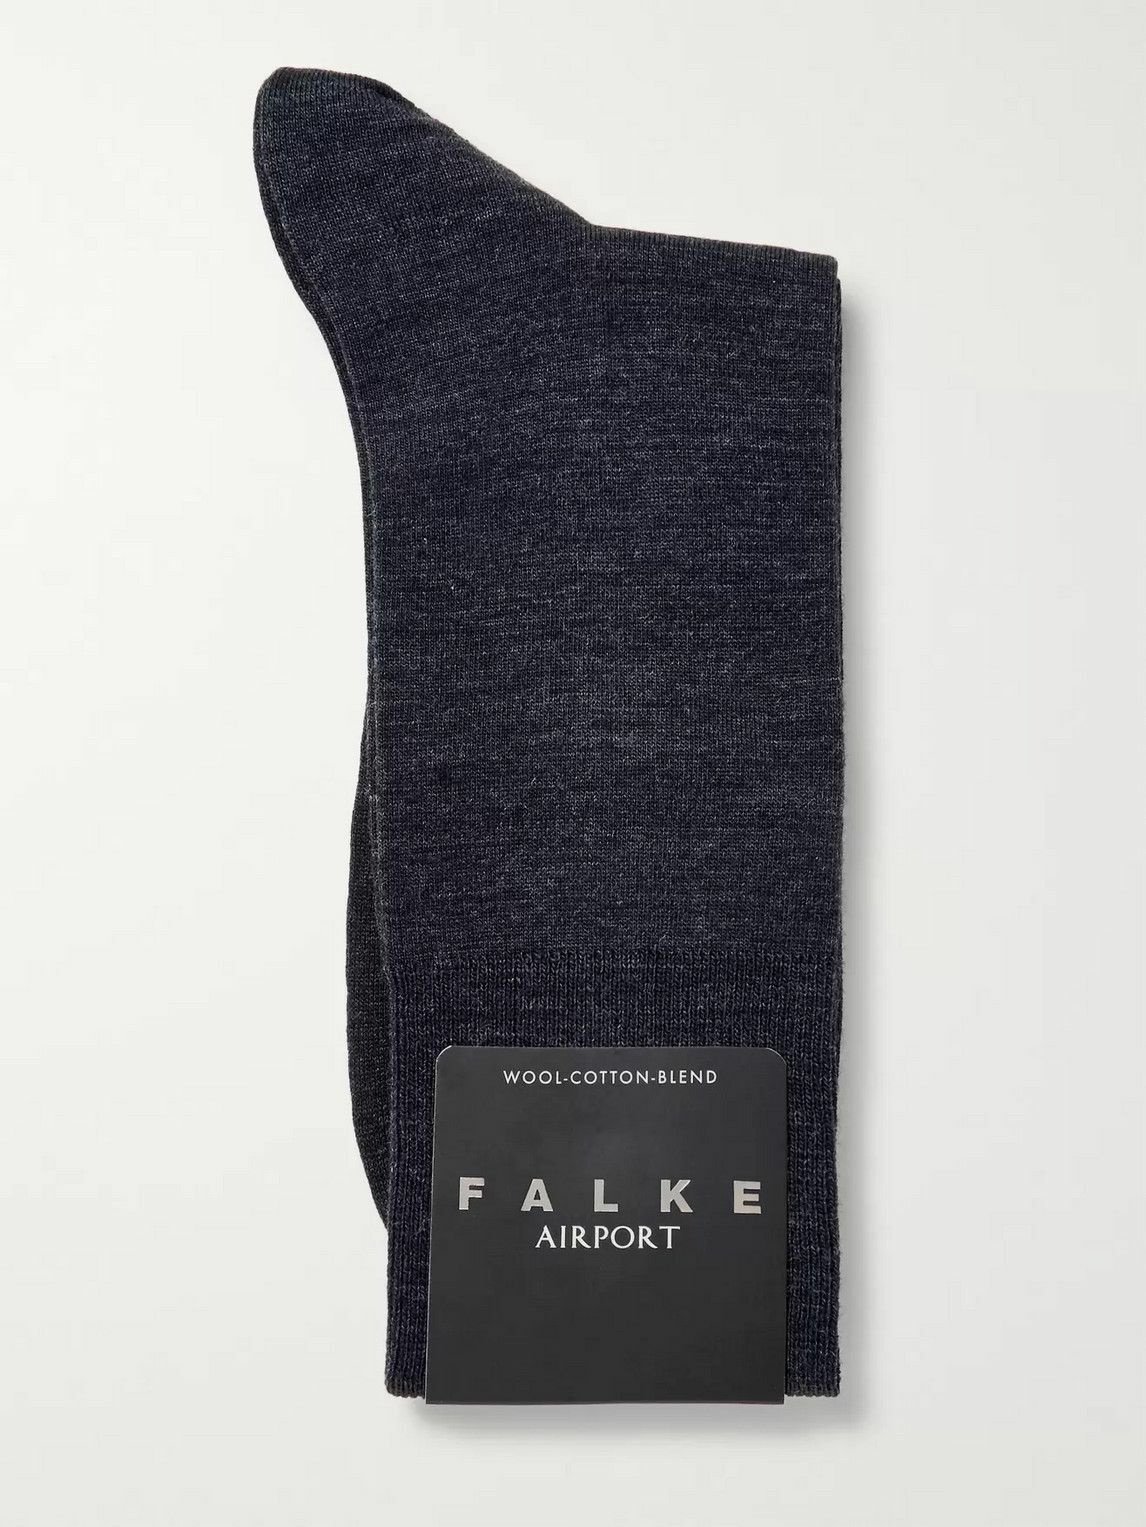 Falke - Airport Mélange Virgin Wool-Blend Socks - Gray